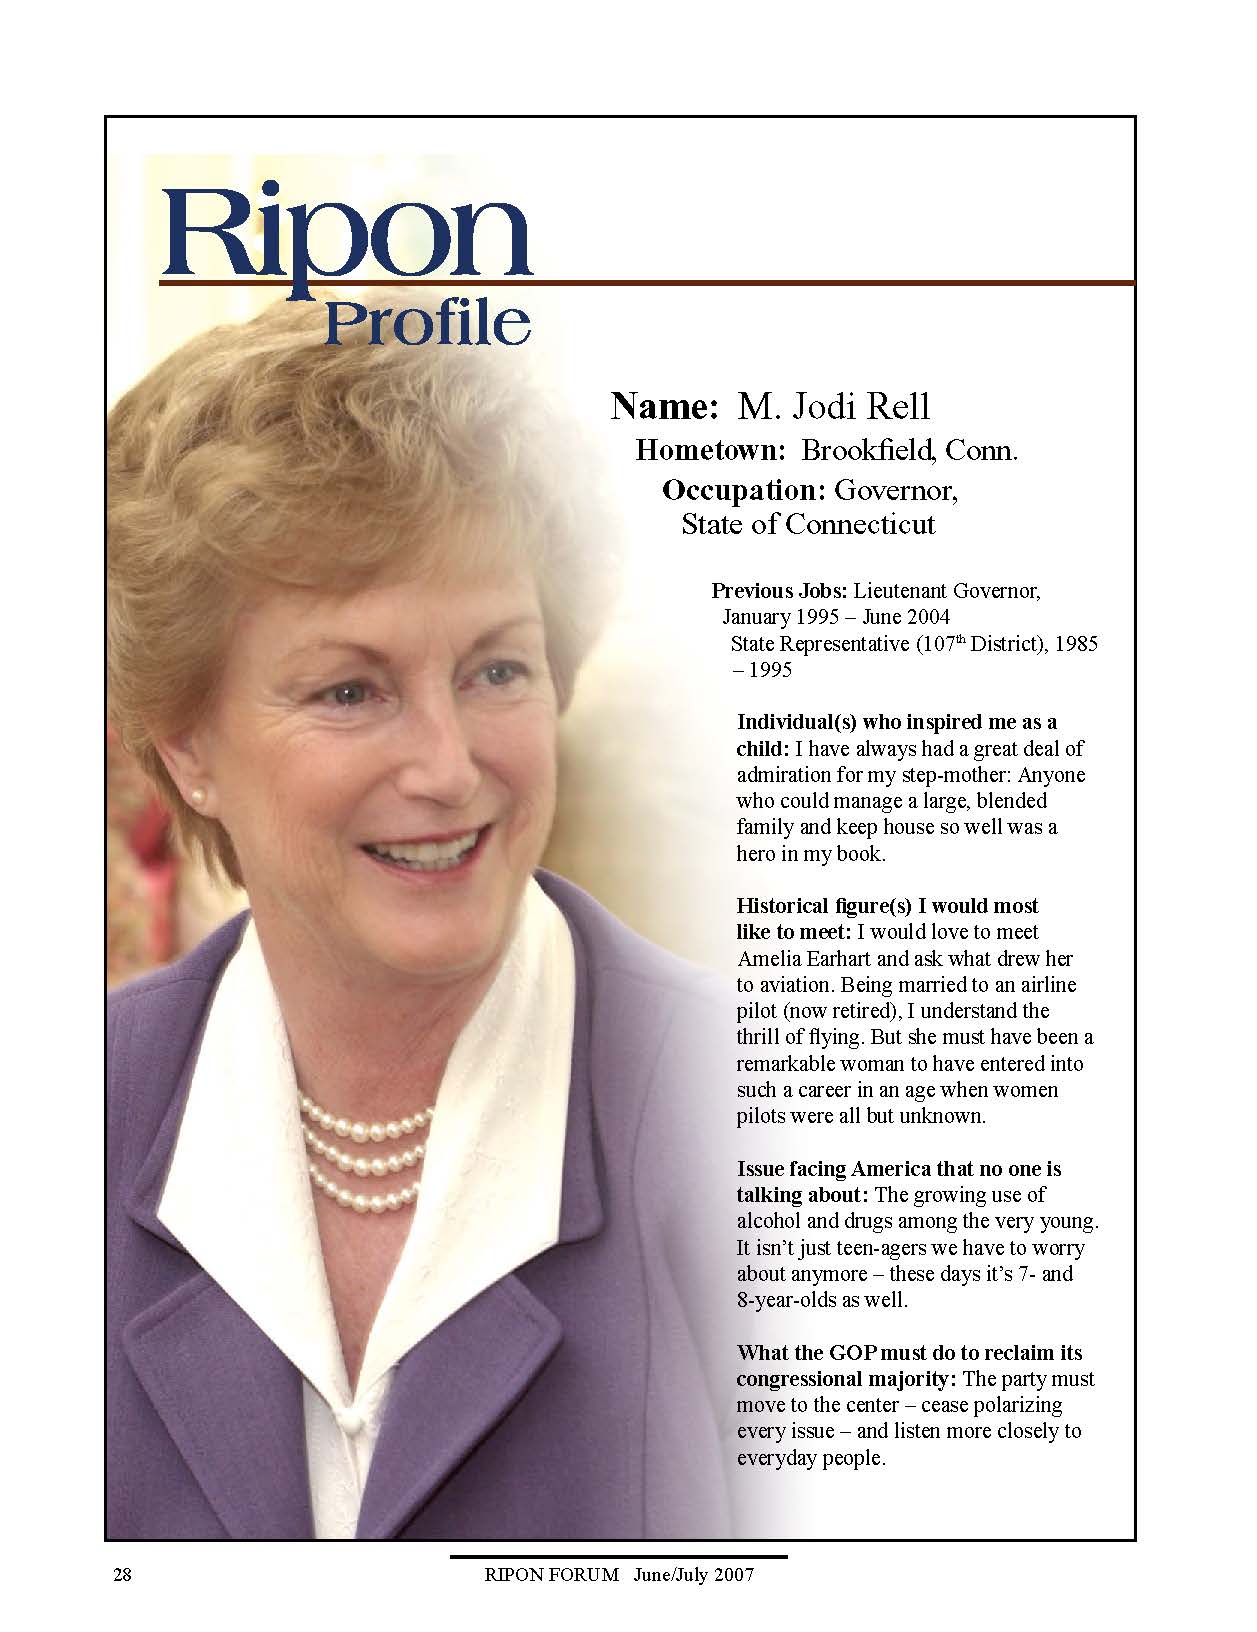 Ripon Profile of M. Jodi Rell